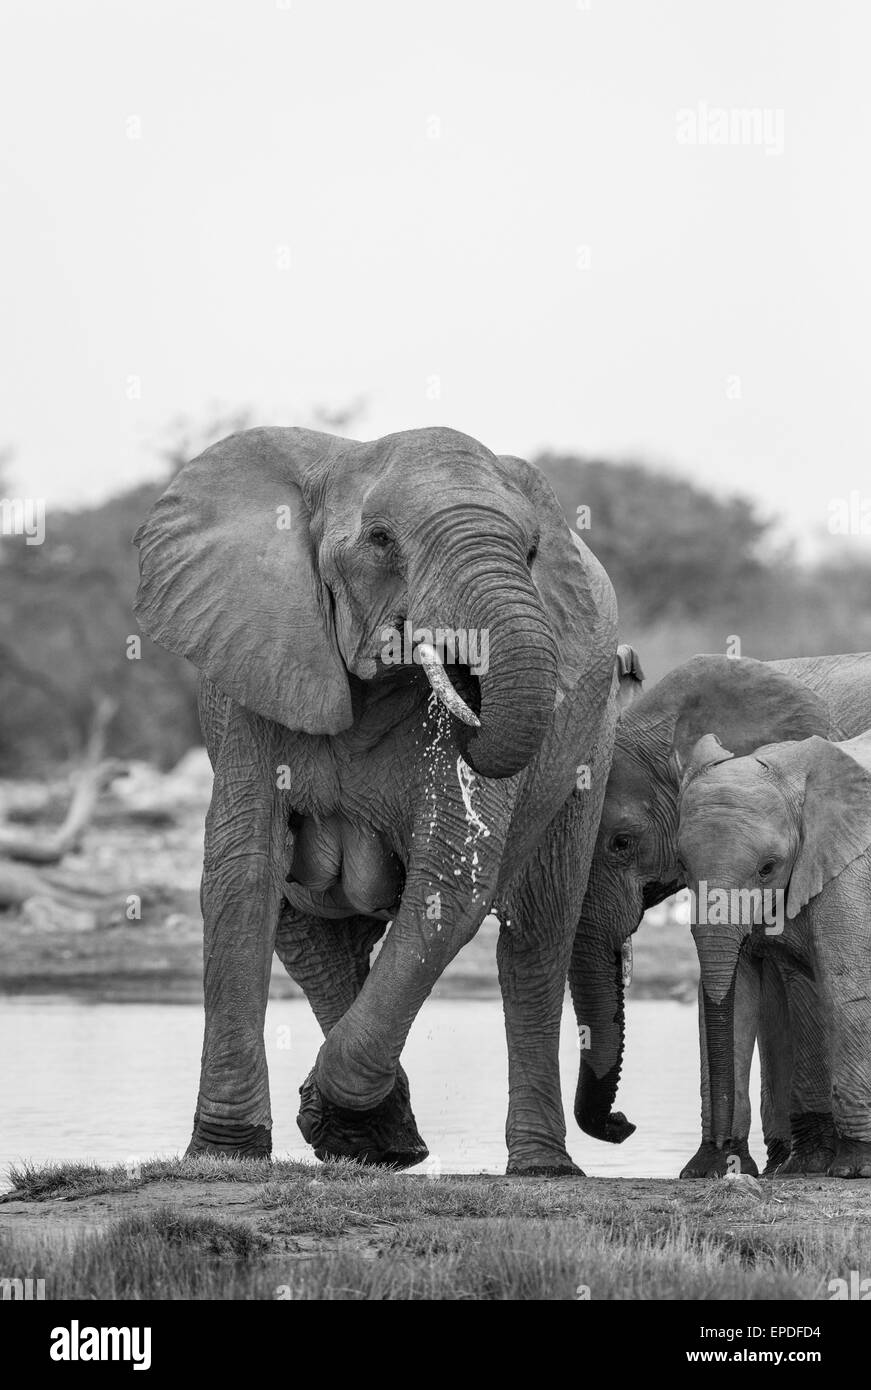 Elephants at a water hole in Etosha National Park, Namibia. Stock Photo